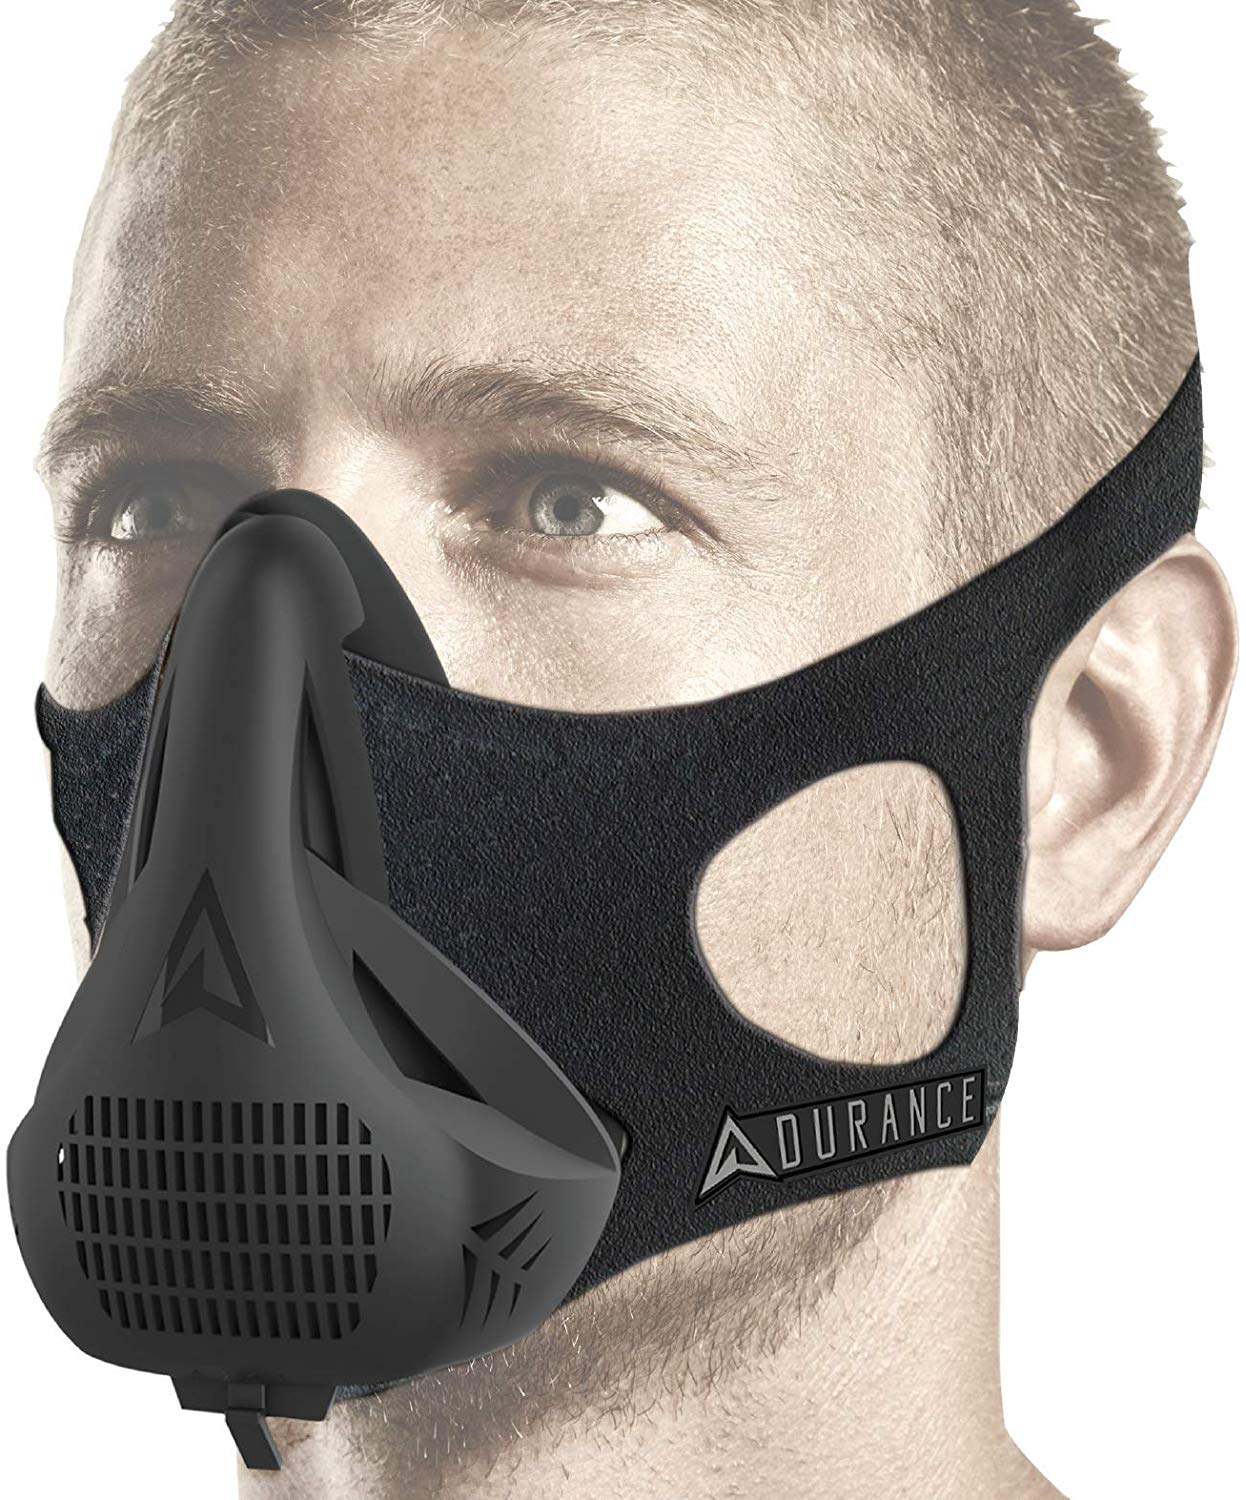 Adurance High Altitude Mask Aduro Sport – Aduro Products